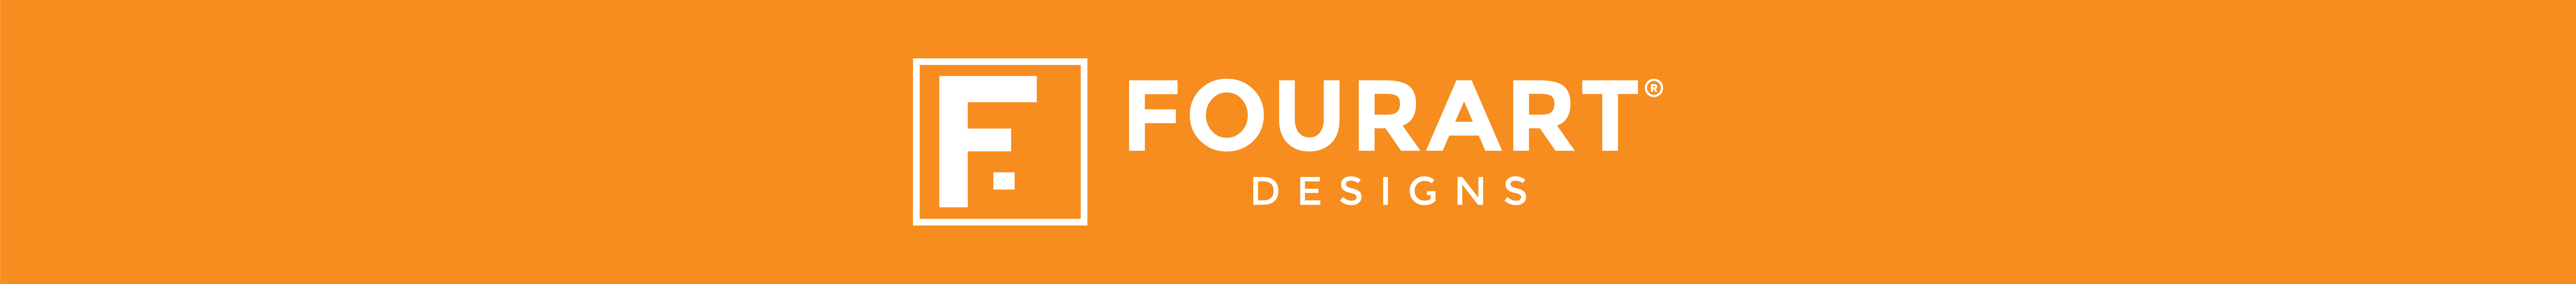 Fourart Designs's profile banner